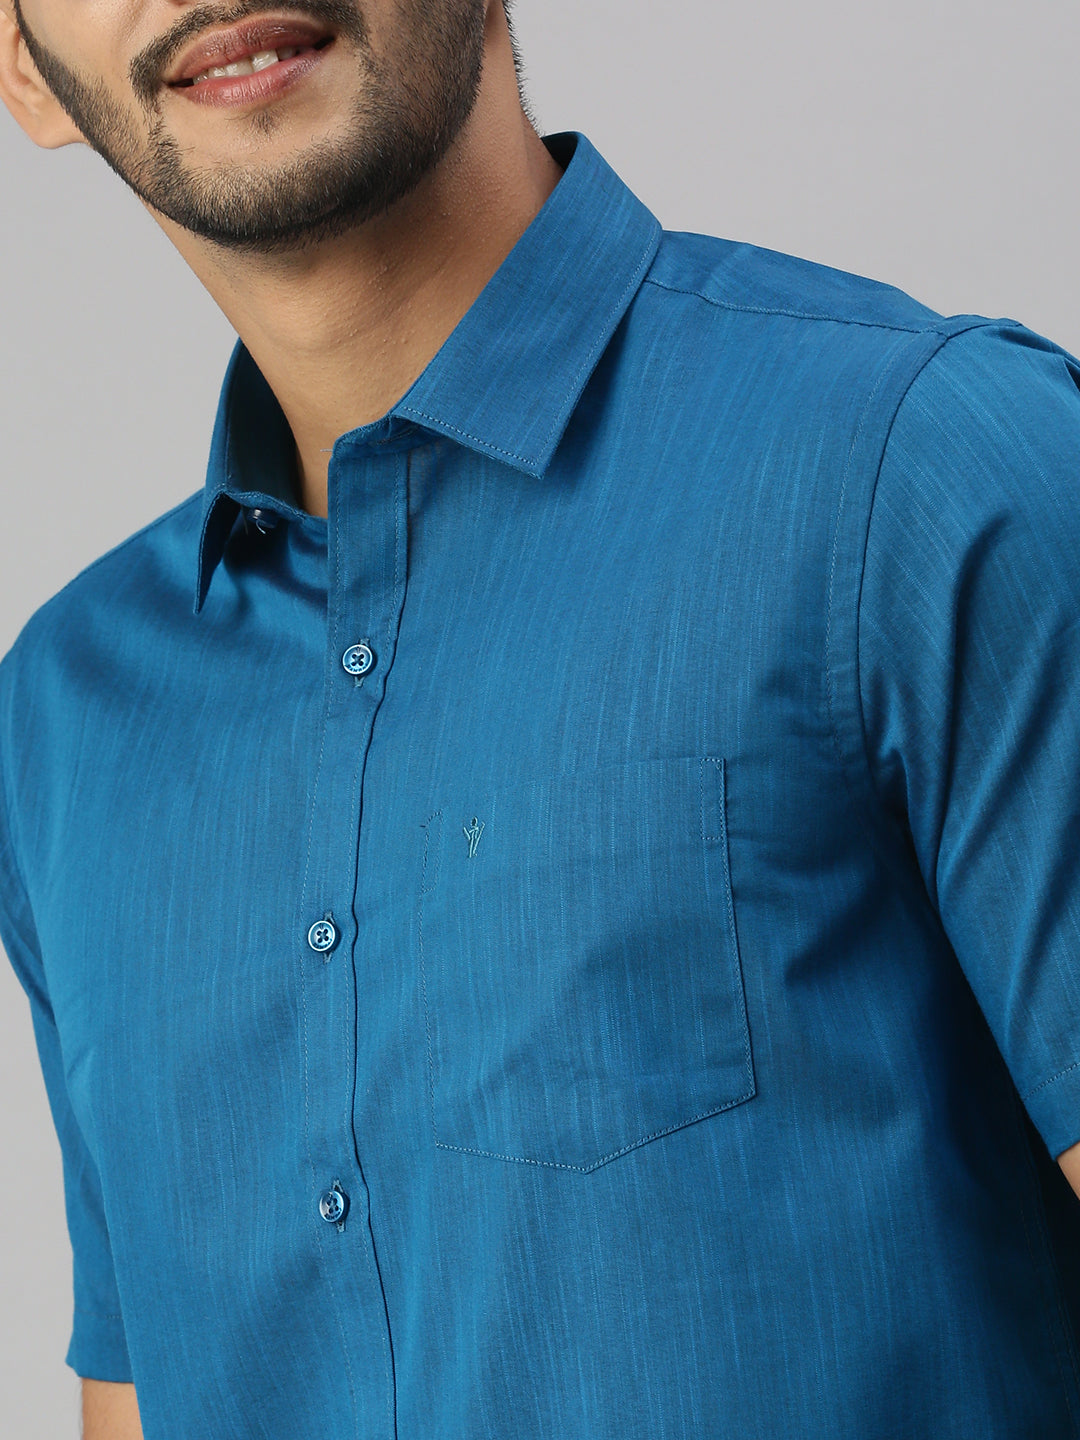 Mens Blue Matching Border Dhoti & Half Sleeves Shirt Set Evolution IC4